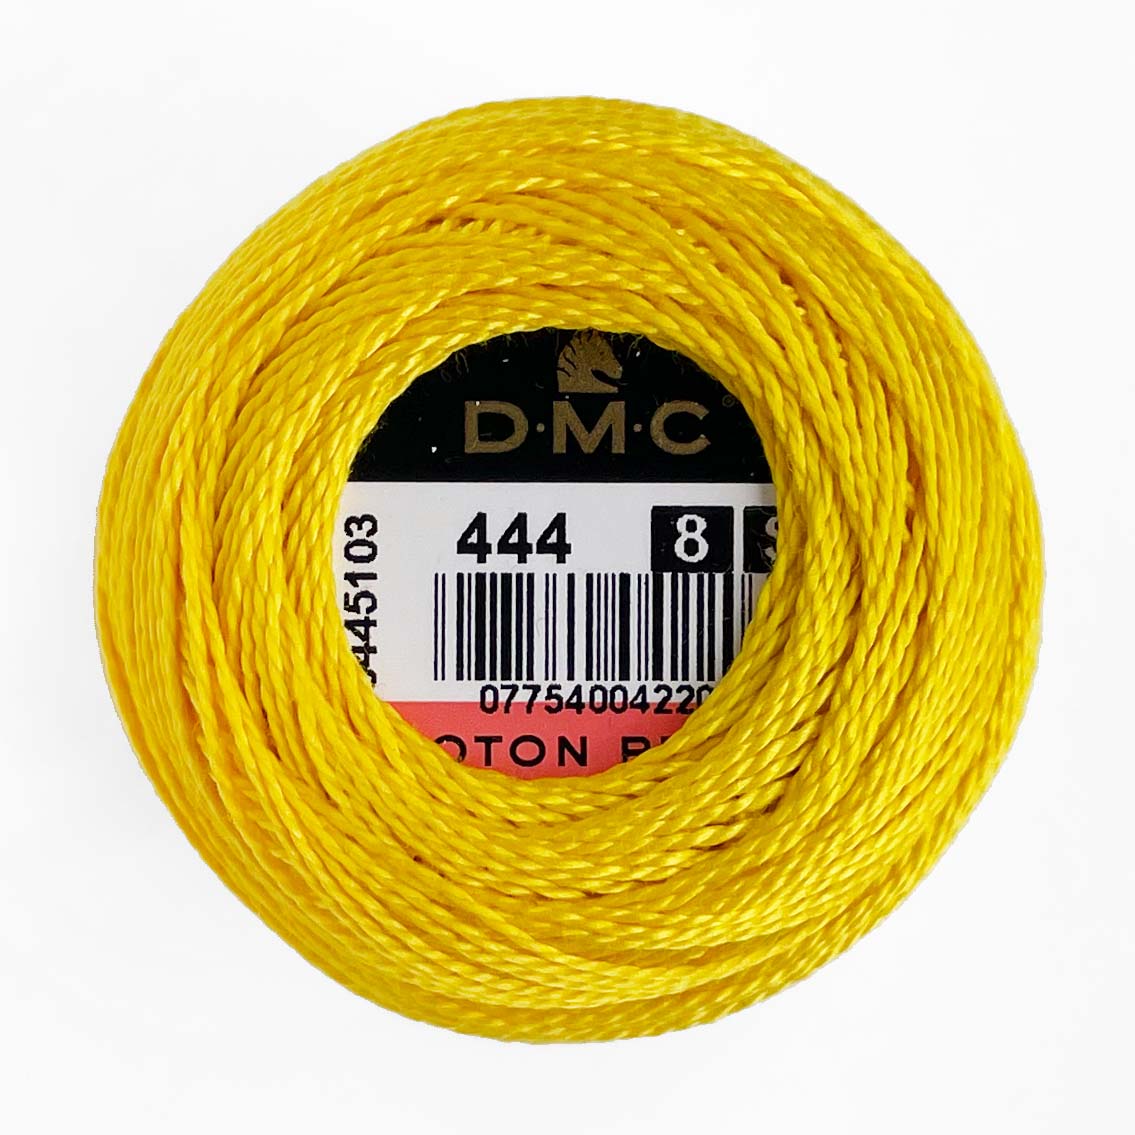 DMC 444: Dark Lemon (size 8 perle cotton)